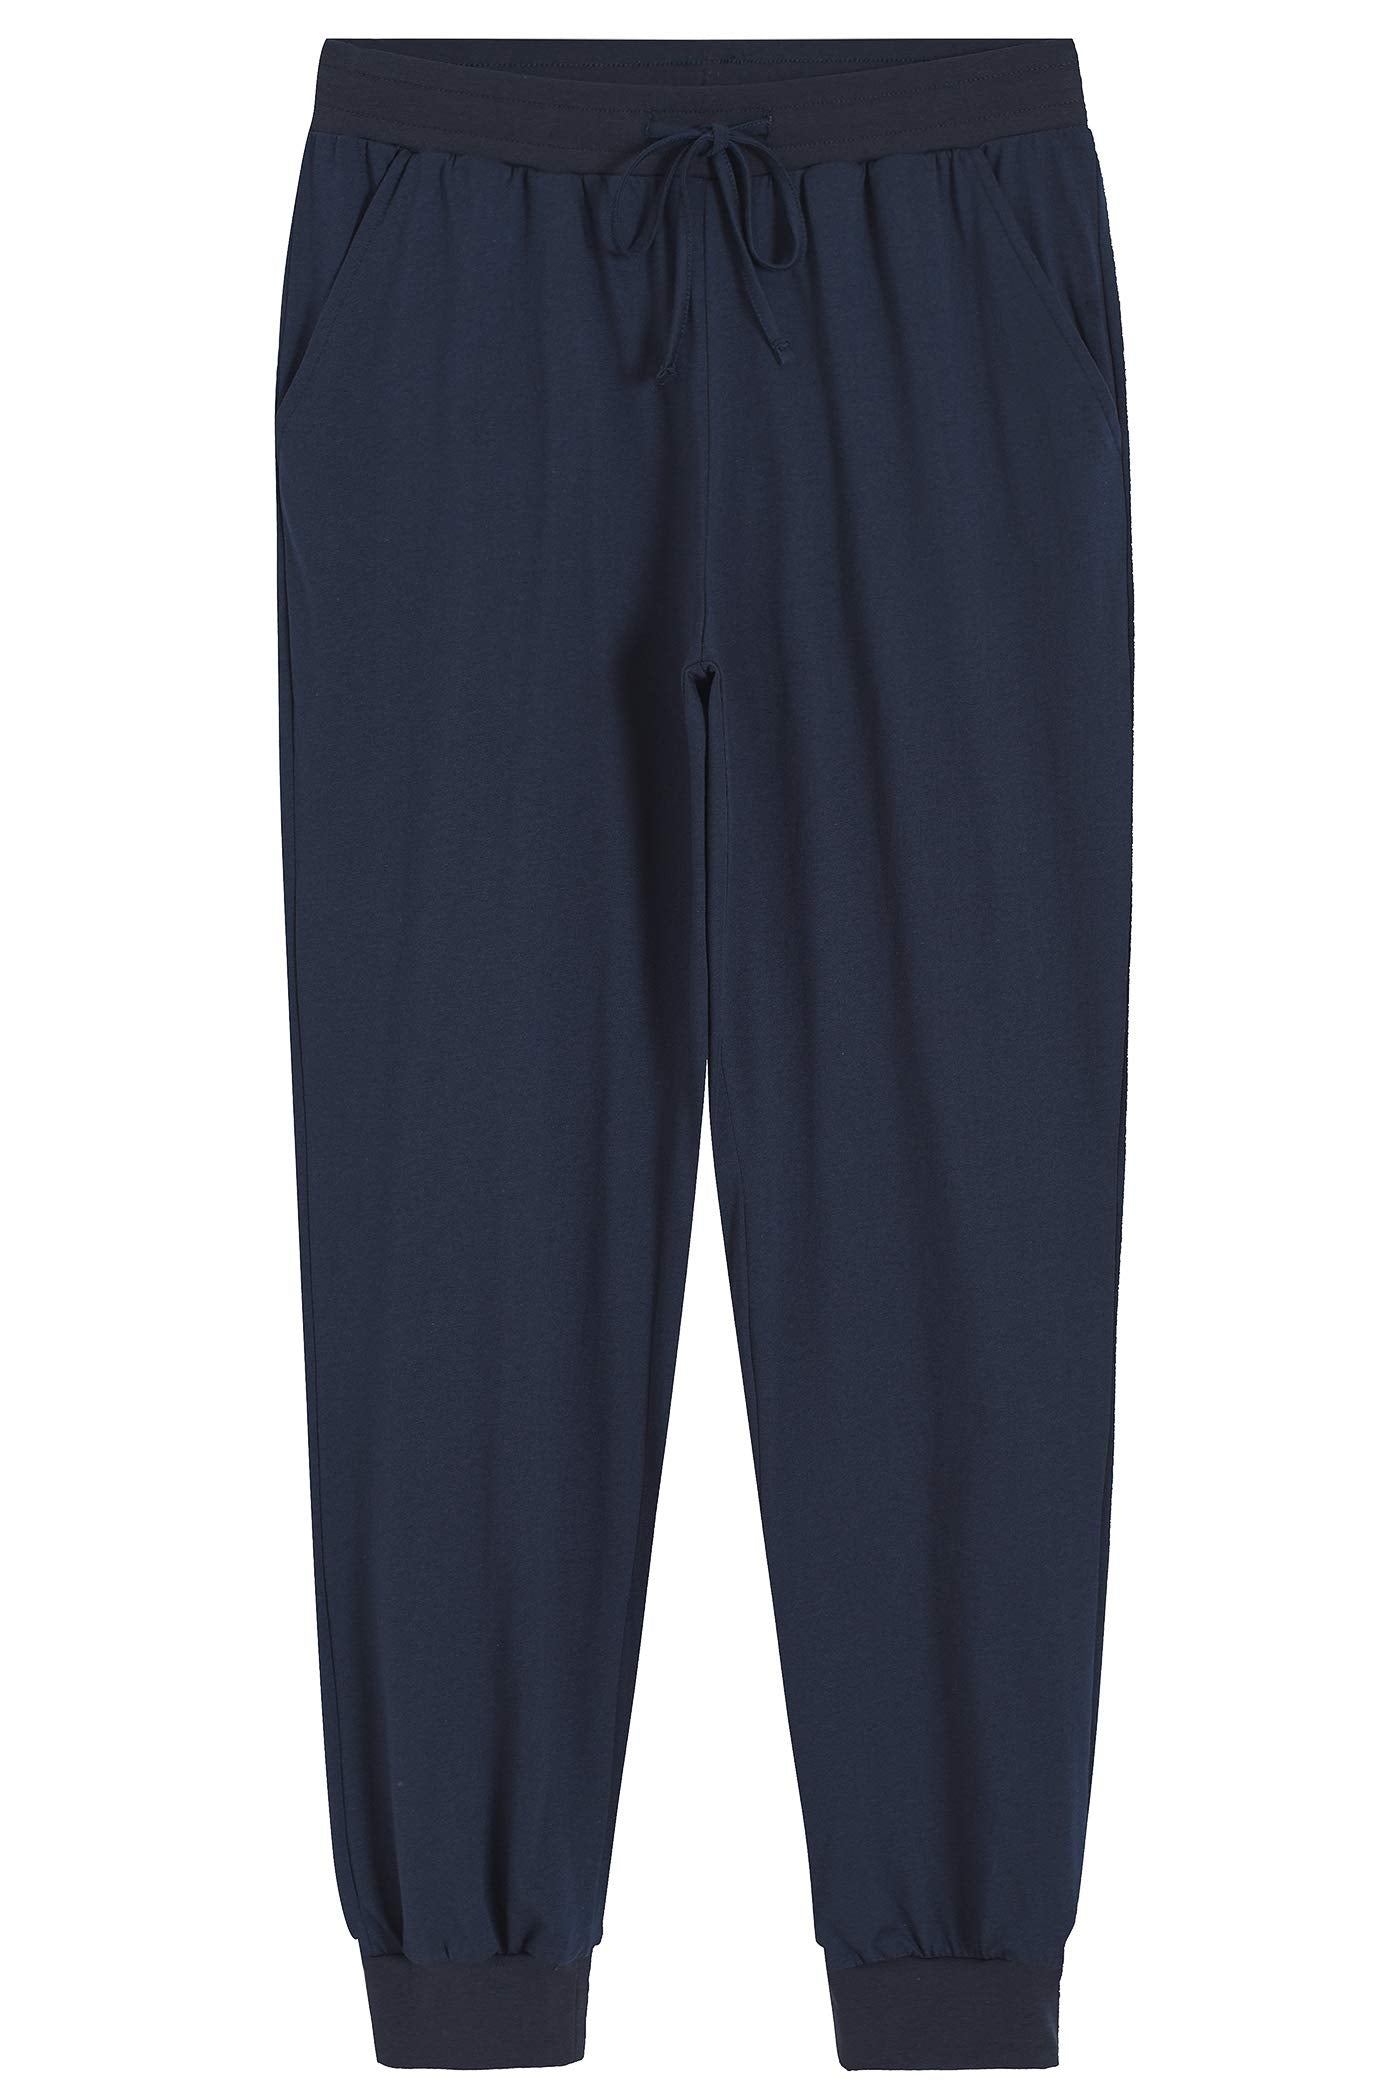 Women's Fleece Lounge Jogger Pajama Pants - Colsie™ Blue XXL